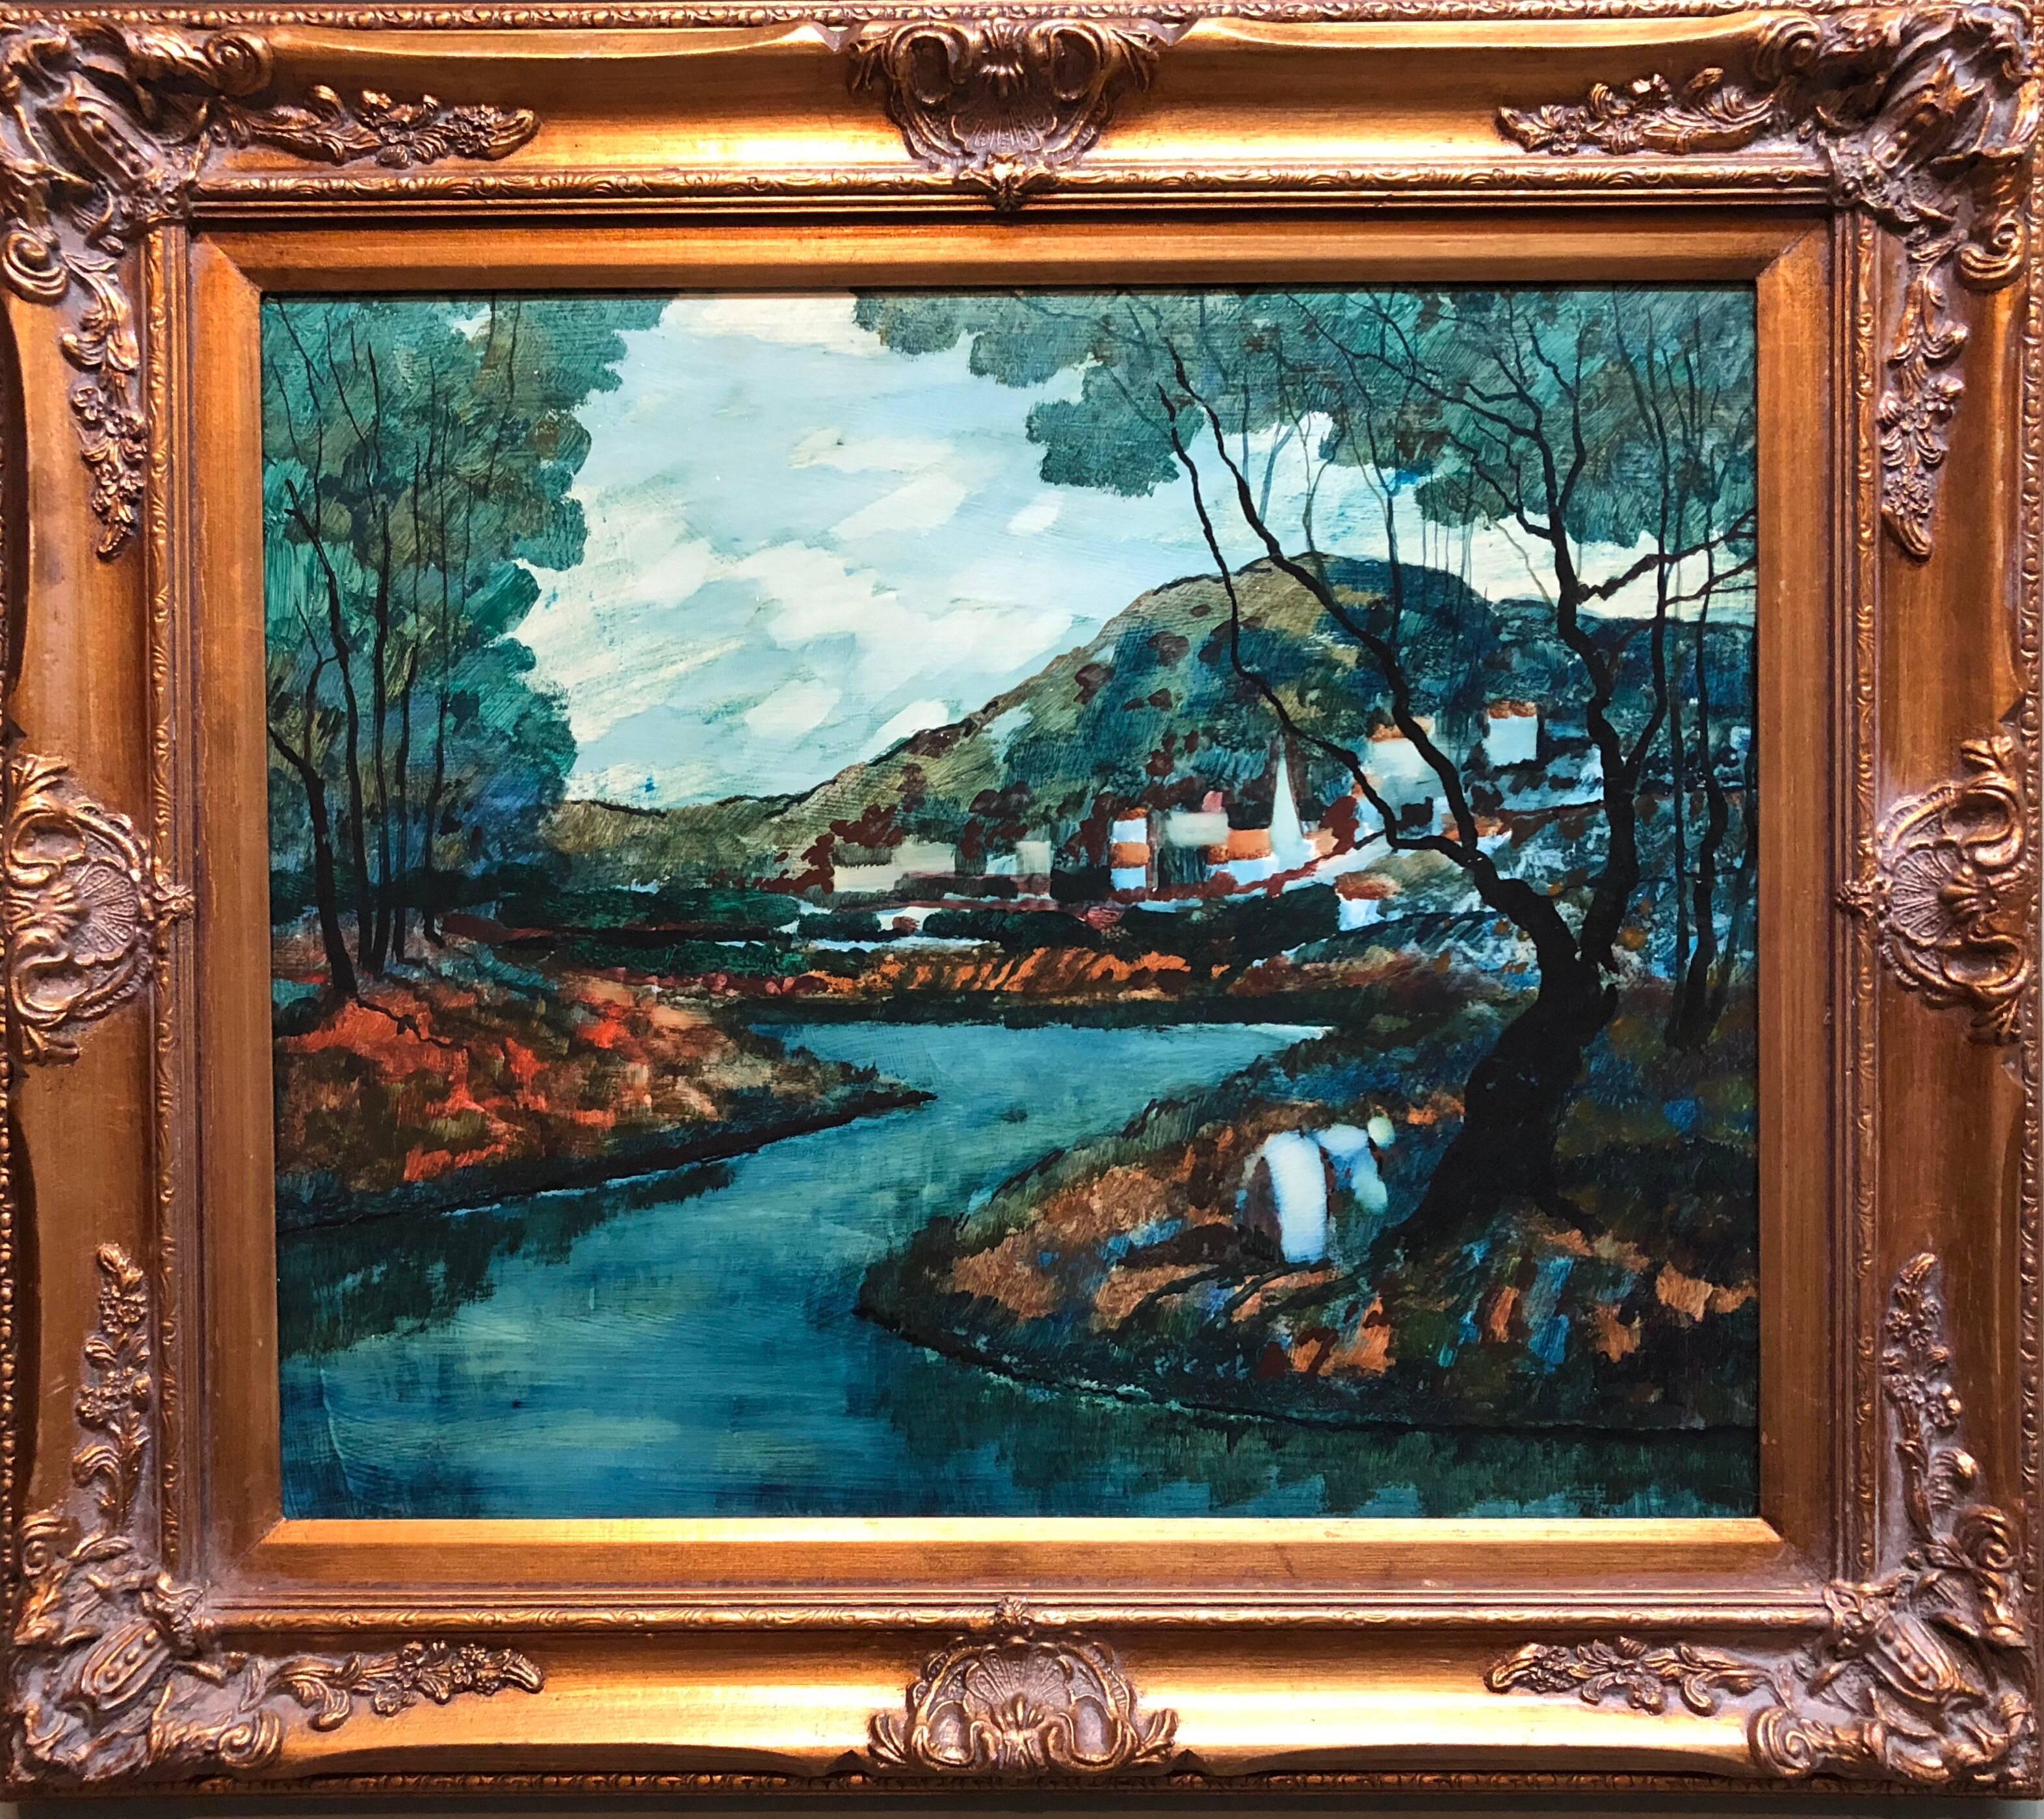 Donald Roy Purdy Landscape Painting - Modernist Landscape Oil Painting